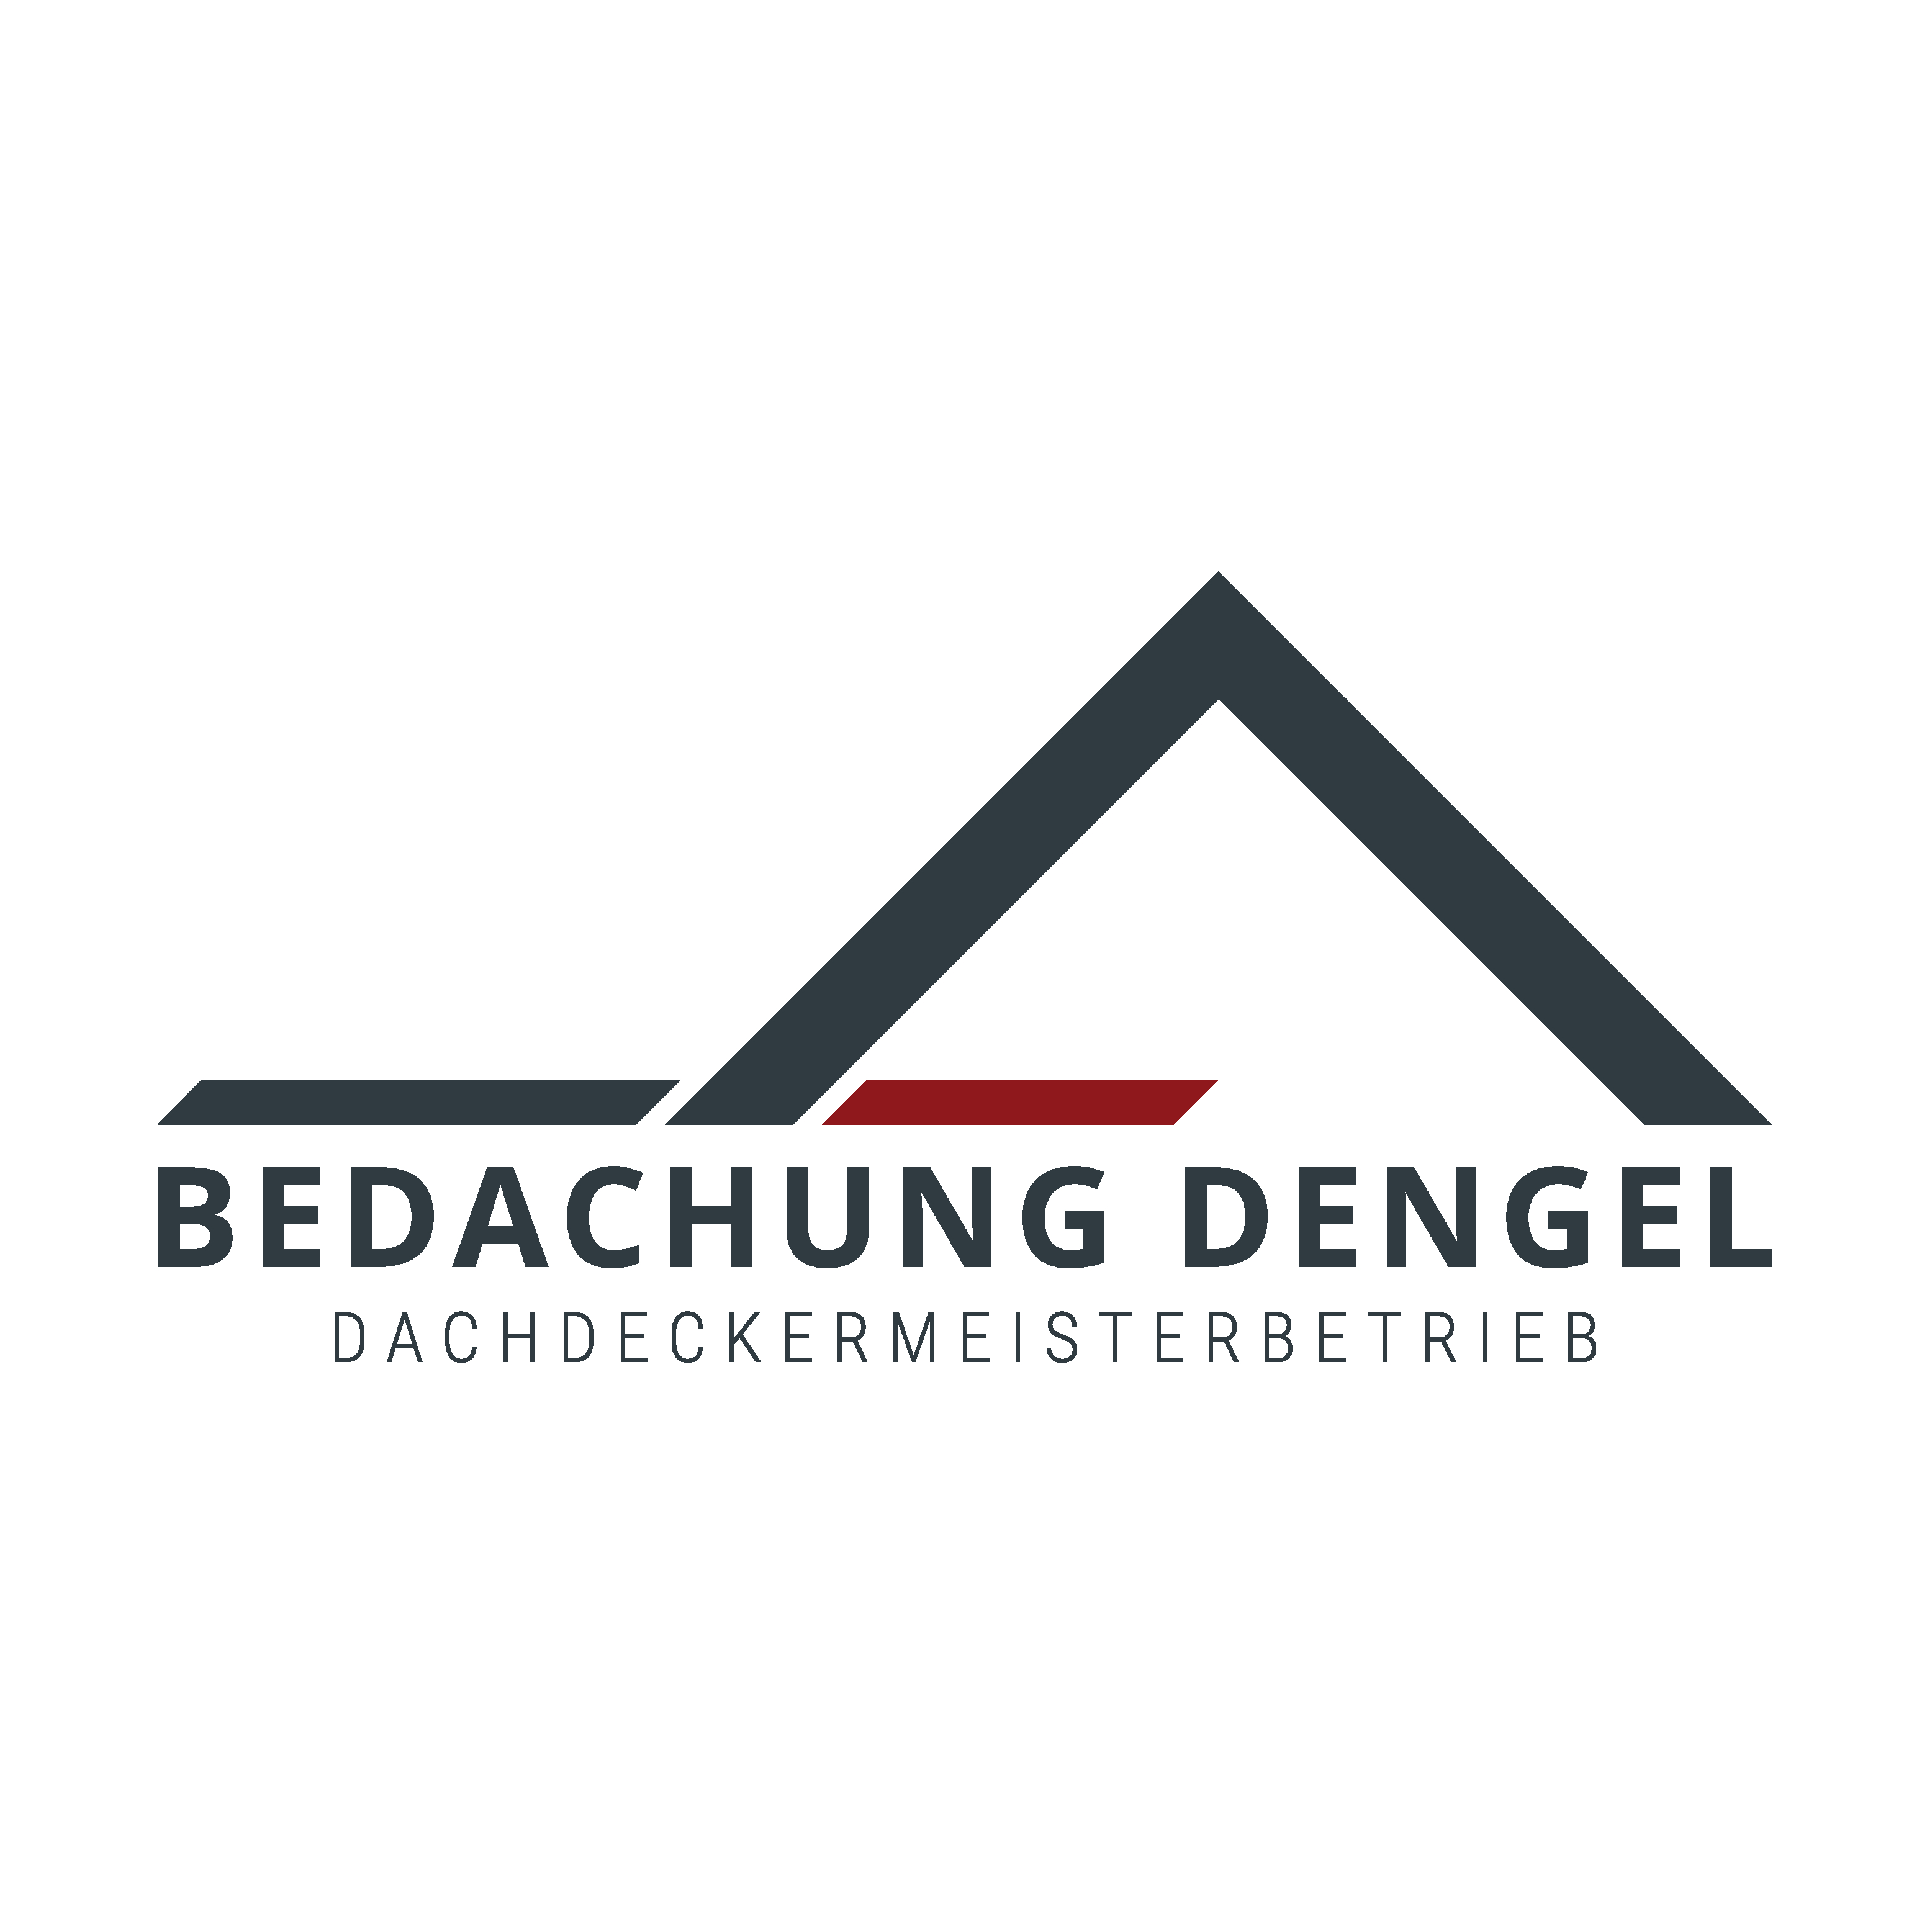 Dachdecker - Bedachungen Dengel in Siegburg - Logo